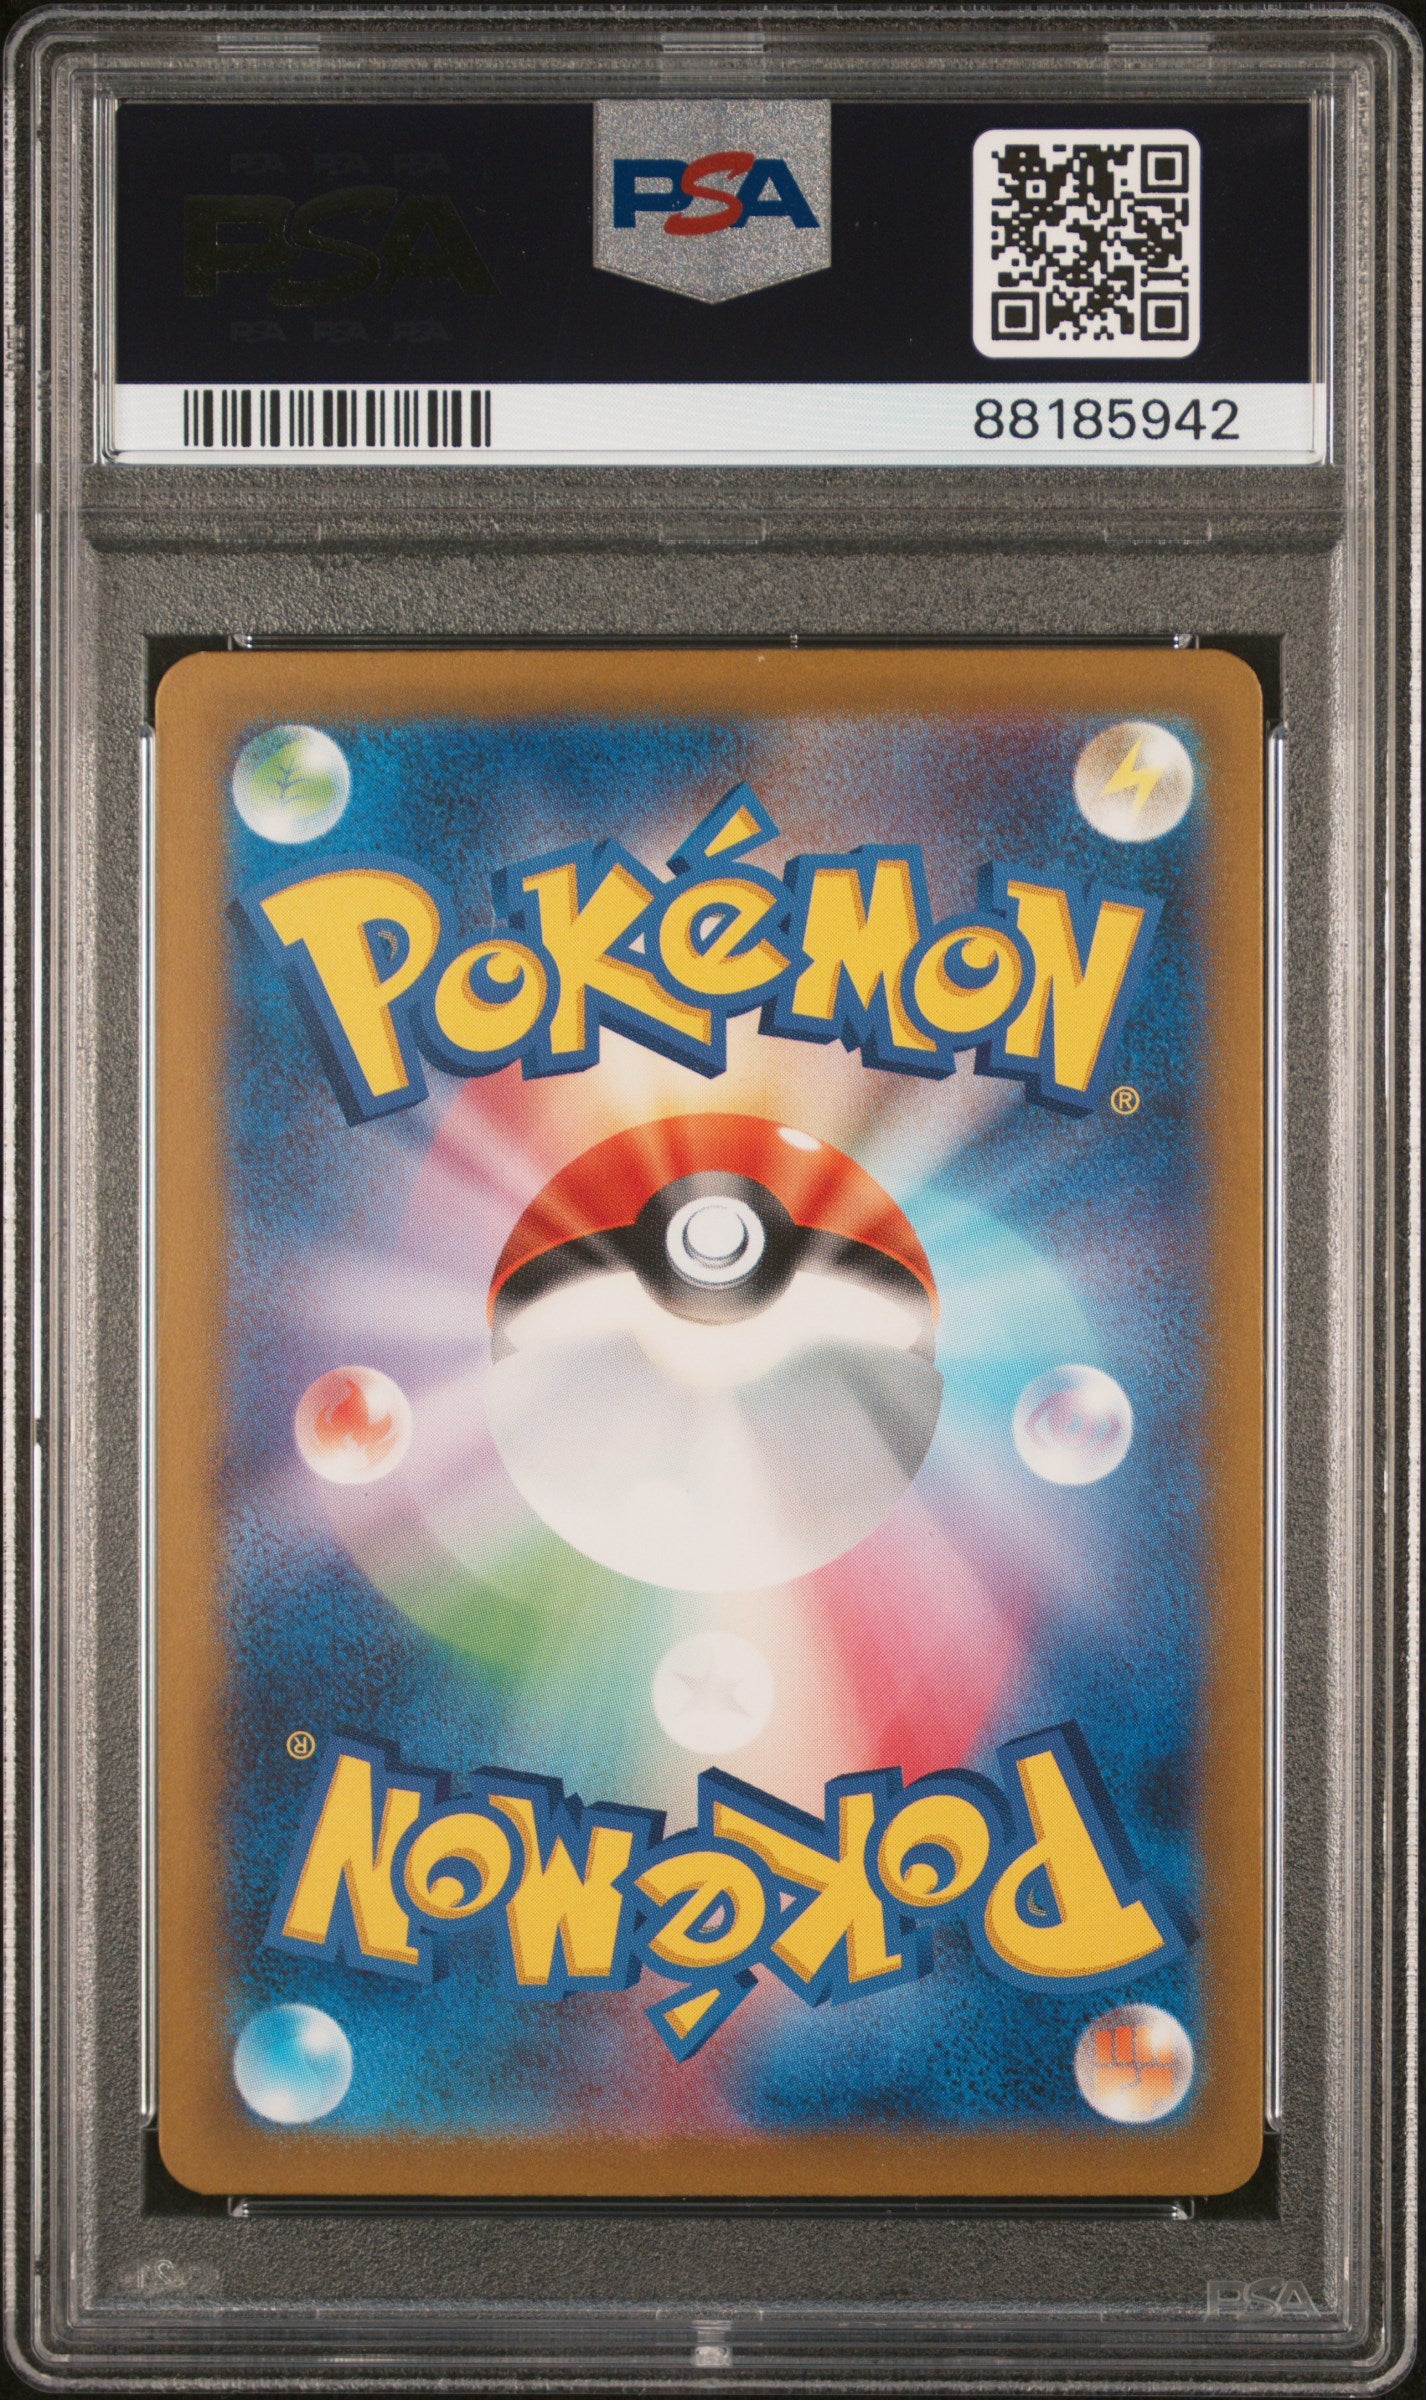 Pokémon Japanese - Charmander SVG 051/049 (Art Rare) - PSA 10 (GEM MINT)